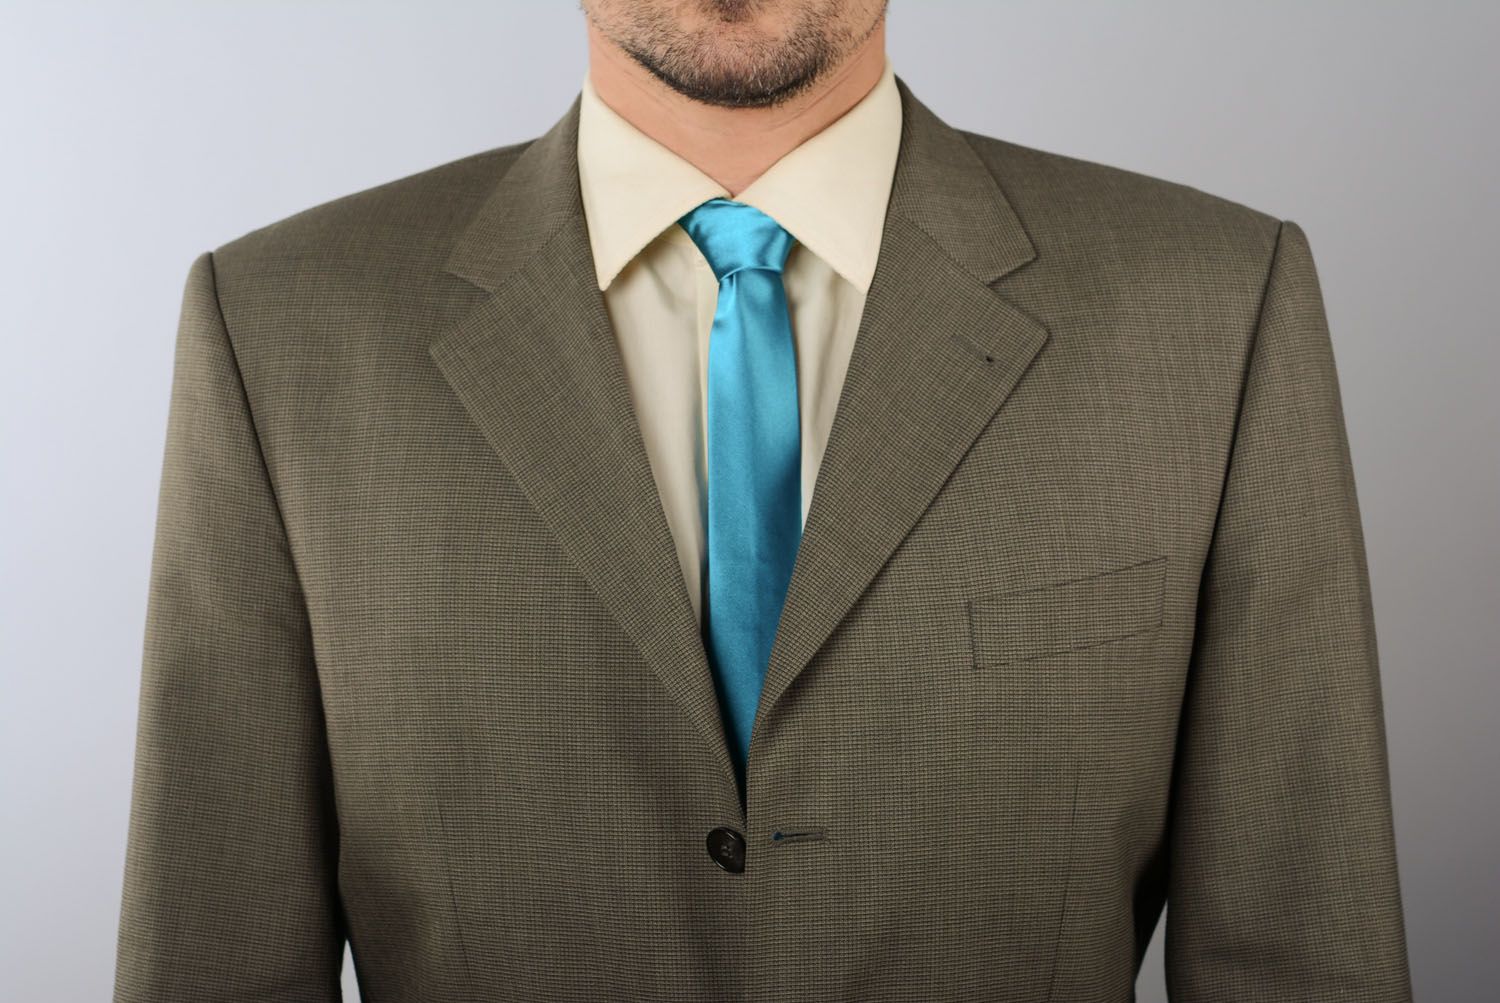 Cravate en gabardine bleu clair faite main photo 4